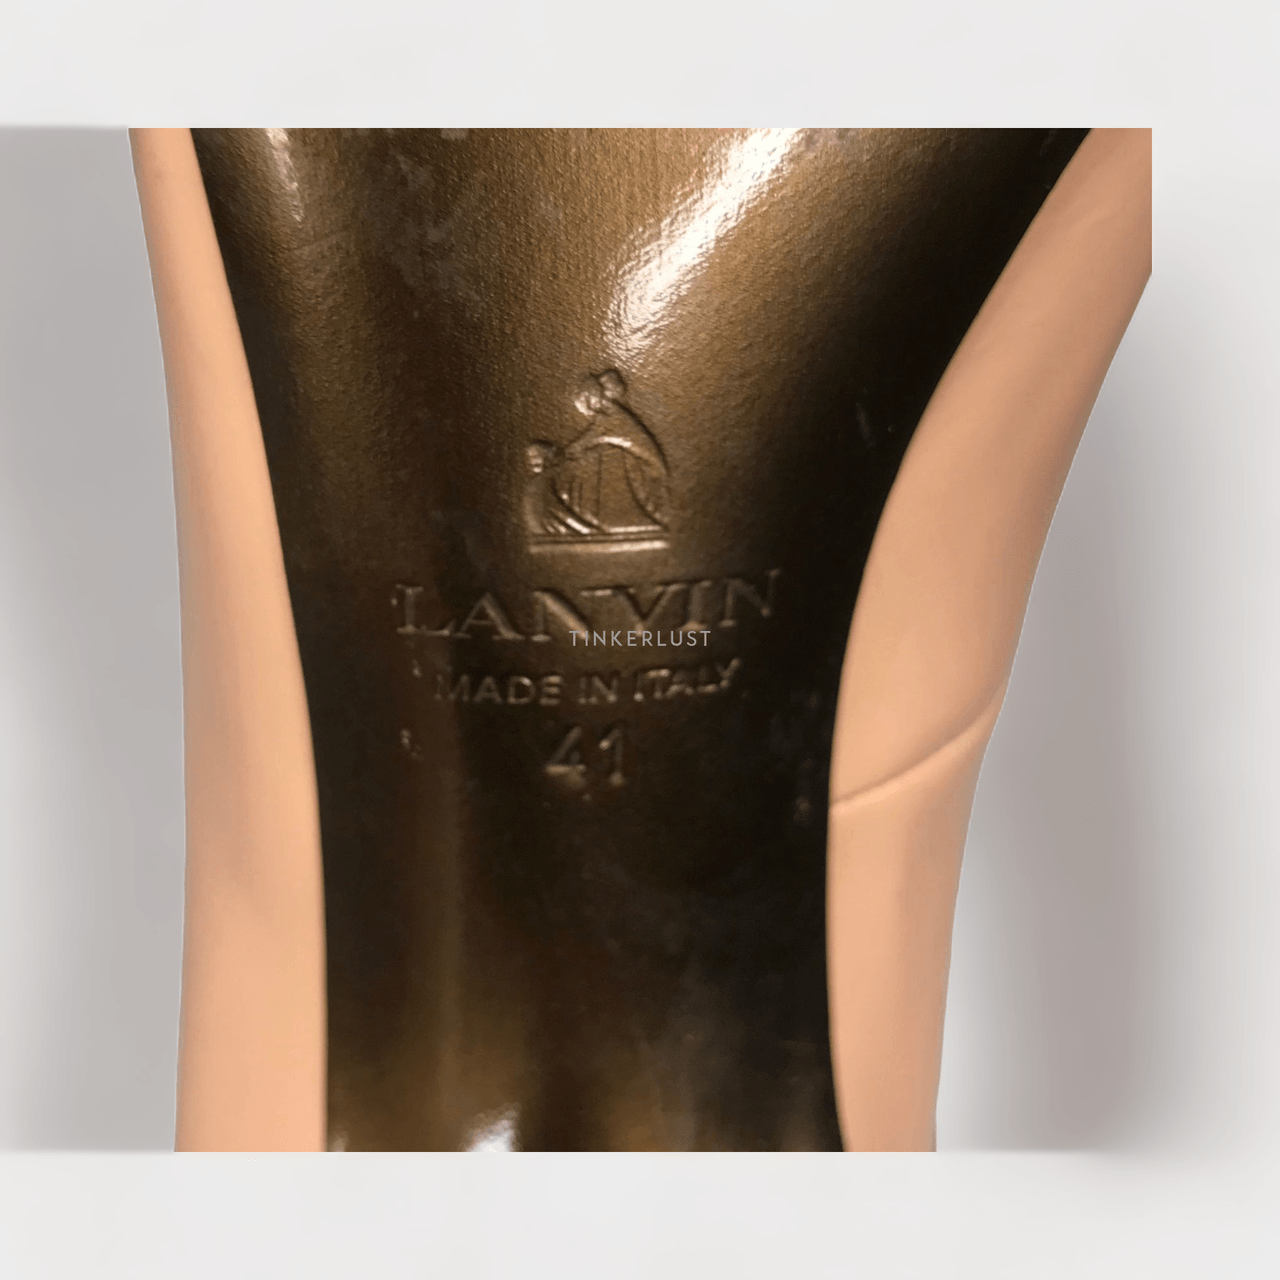 Lanvin Paris in Nude Patent Ribbon Heels	